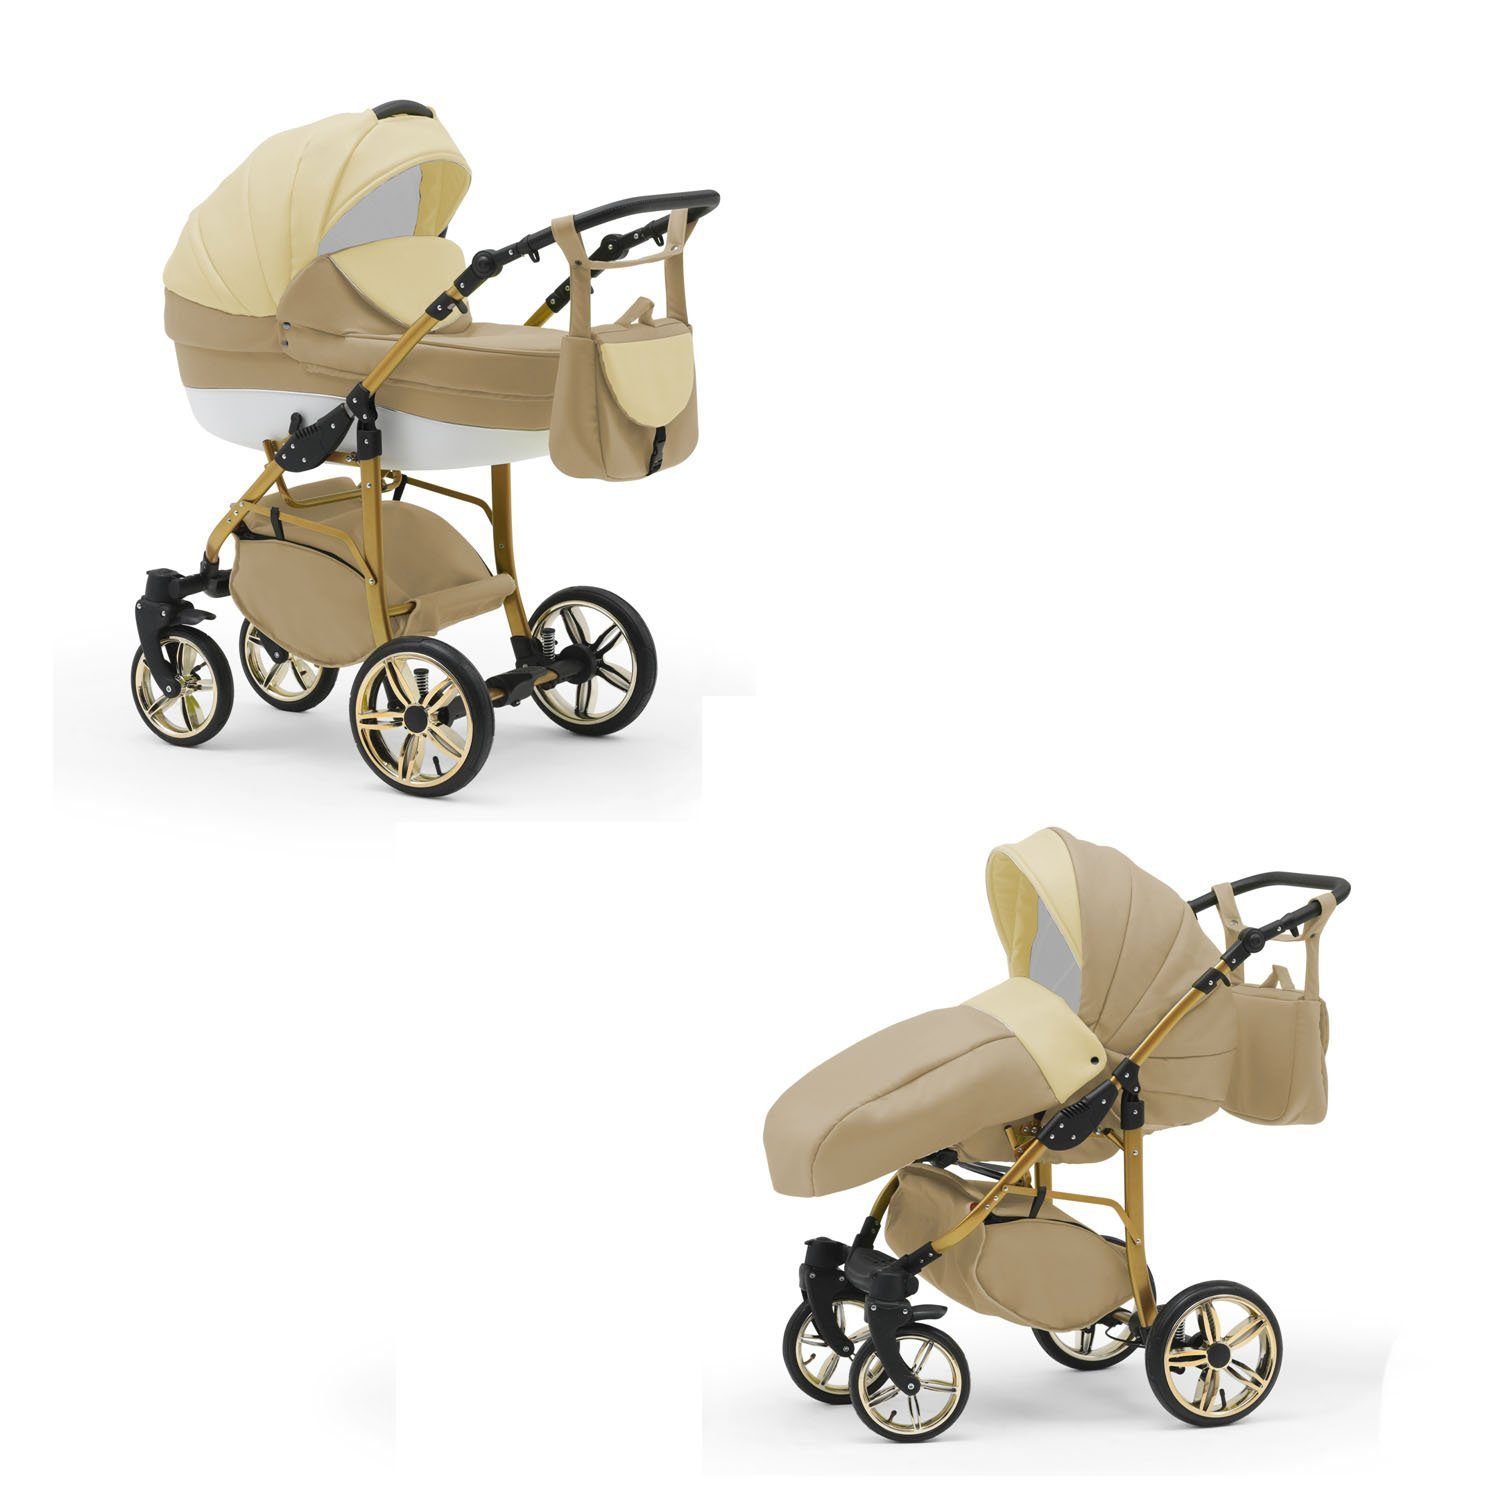 - ECO Teile Cosmo in 46 babies-on-wheels in 2 13 - Farben 1 Gold Beige-Creme-Weiß Kombi-Kinderwagen Kinderwagen-Set